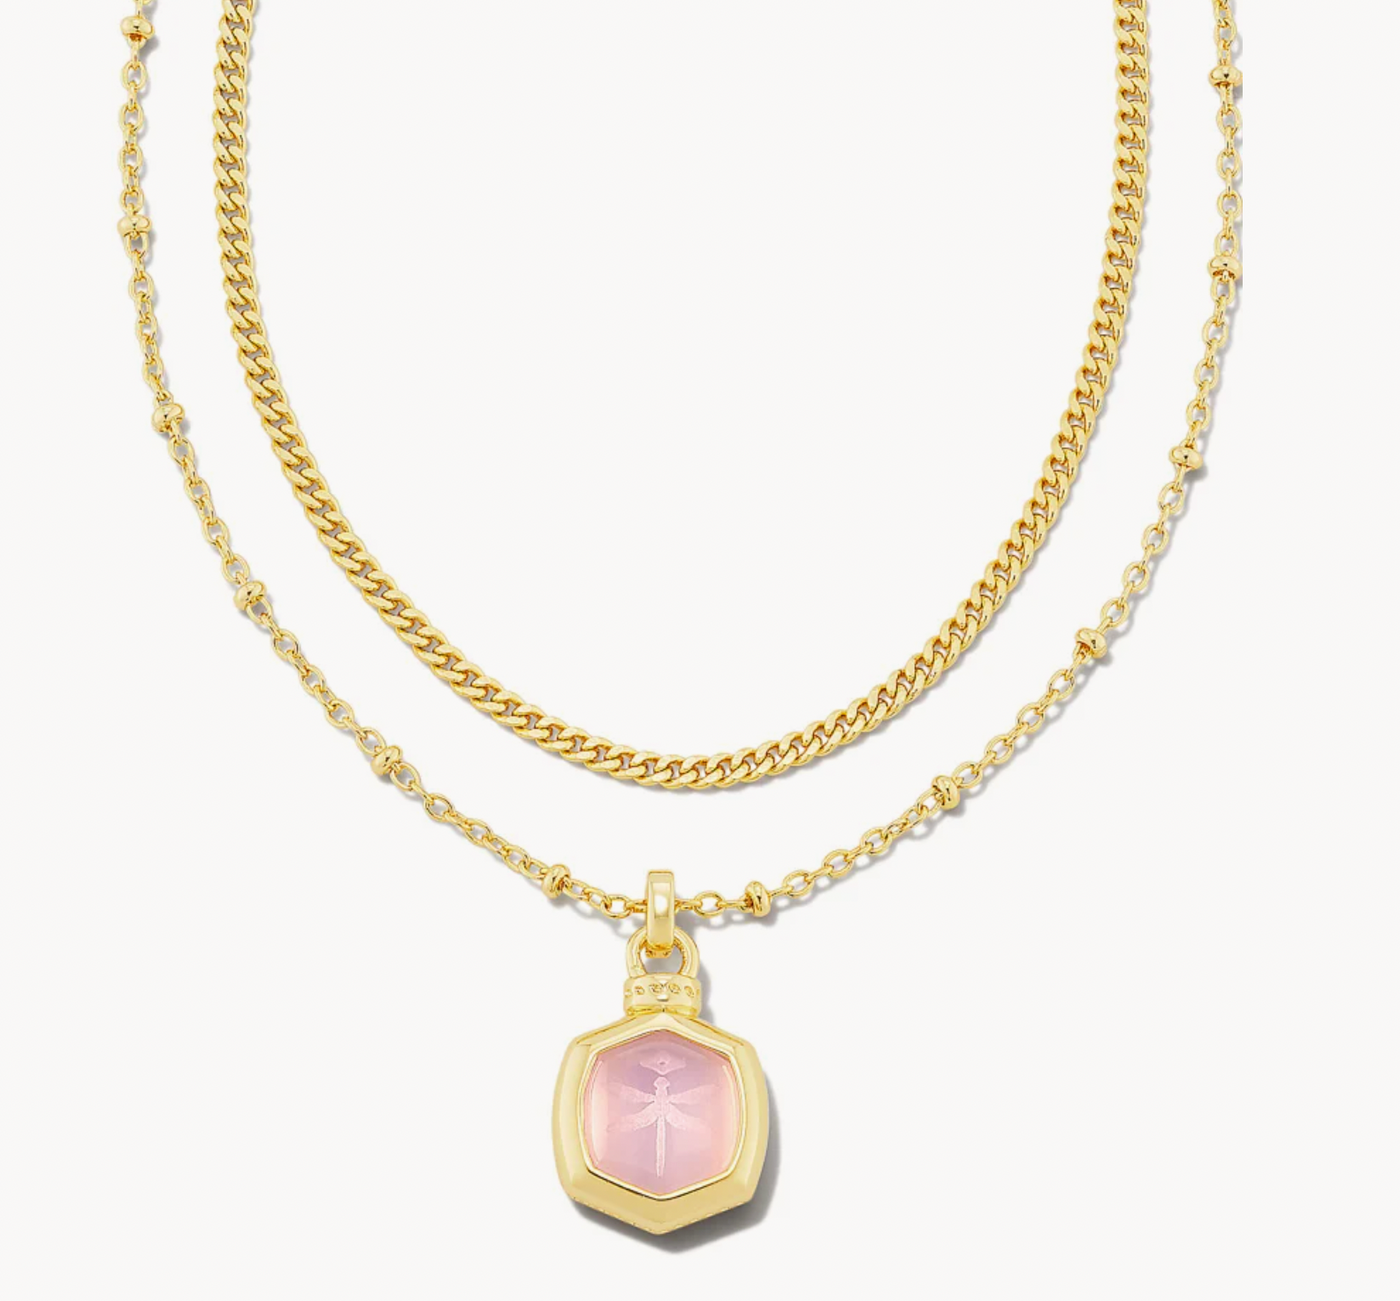 Kendra Scott Davie Intaglio Gold Multi Strand Necklace in Pink Opalite Glass